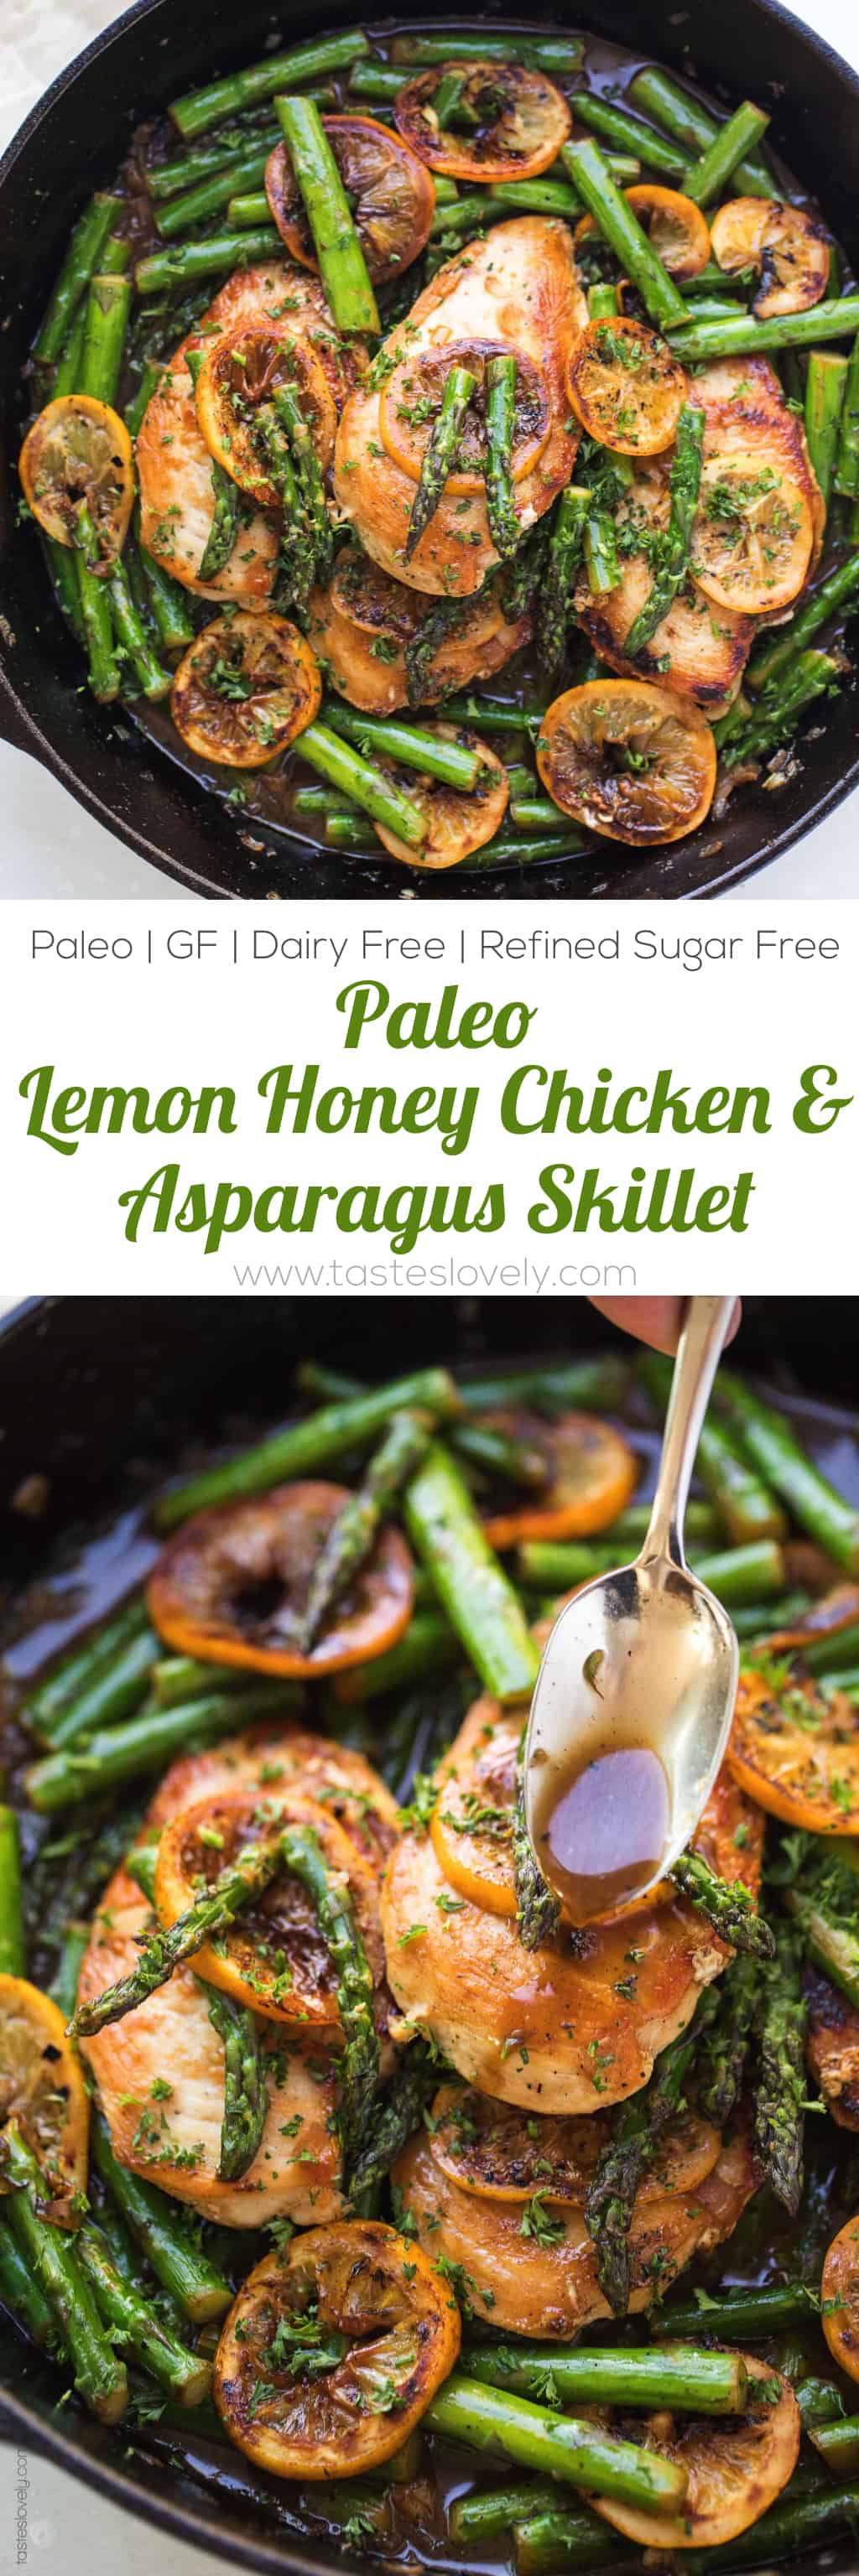 Paleo Lemon Honey Chicken & Asparagus Skillet Dinner Recipe (gluten free, grain free, dairy free, refined sugar free, clean eating)